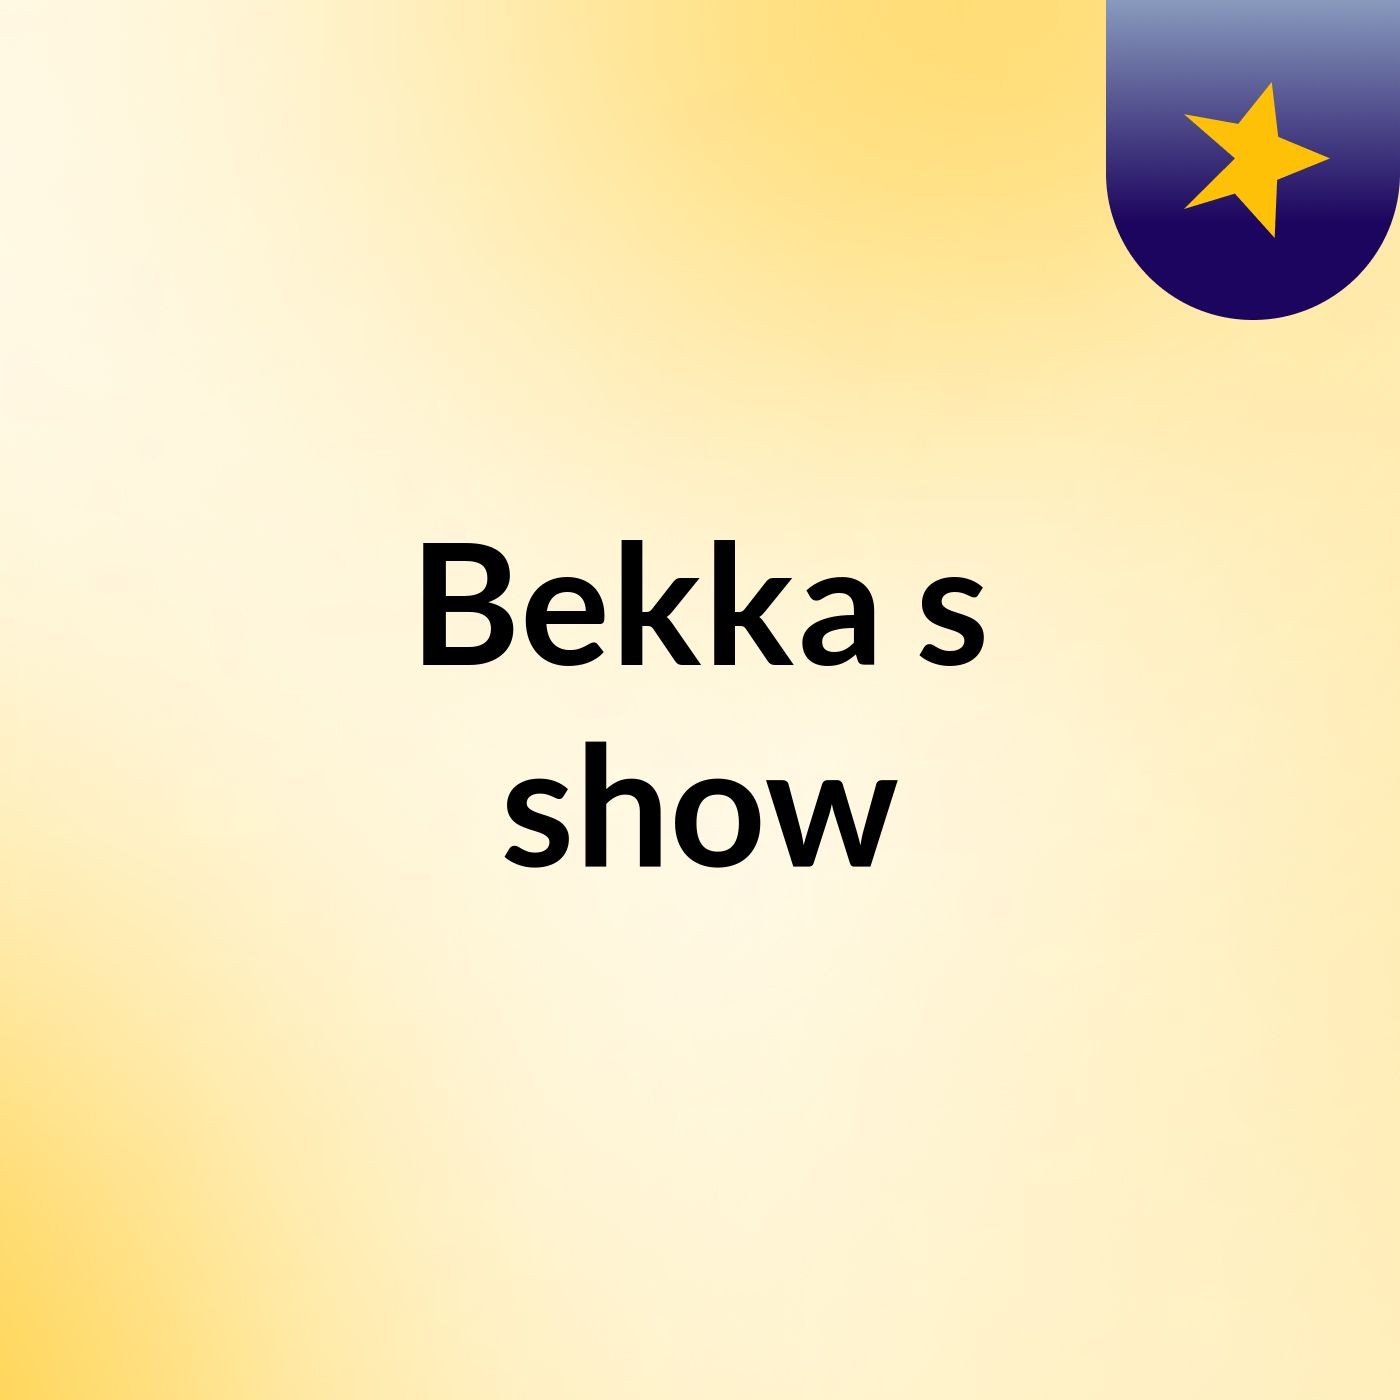 Bekka's show